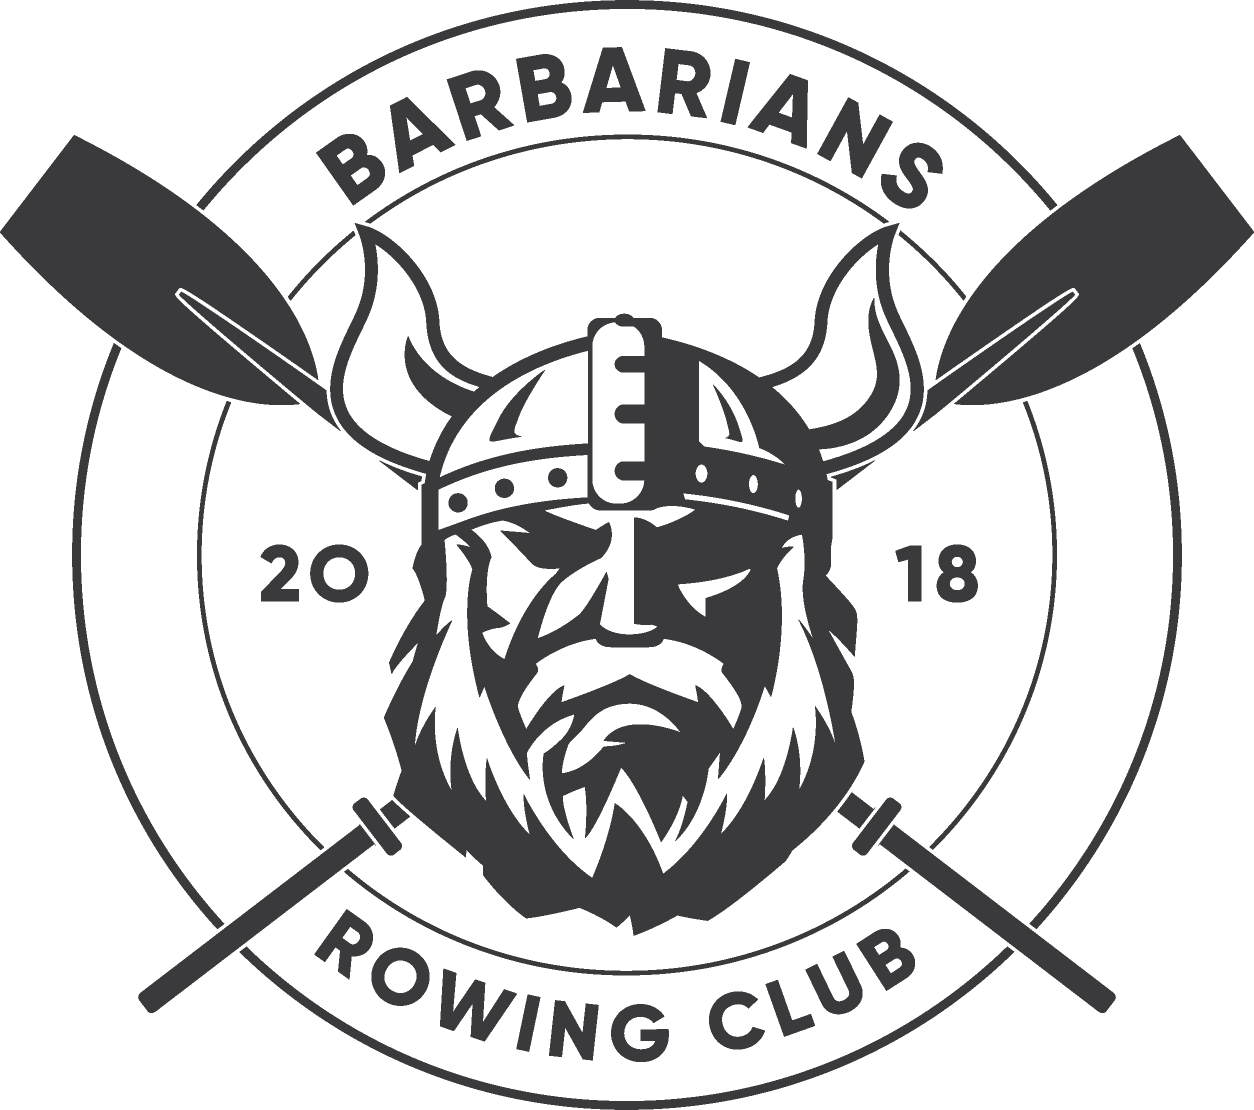 Barbarians Rowing Club